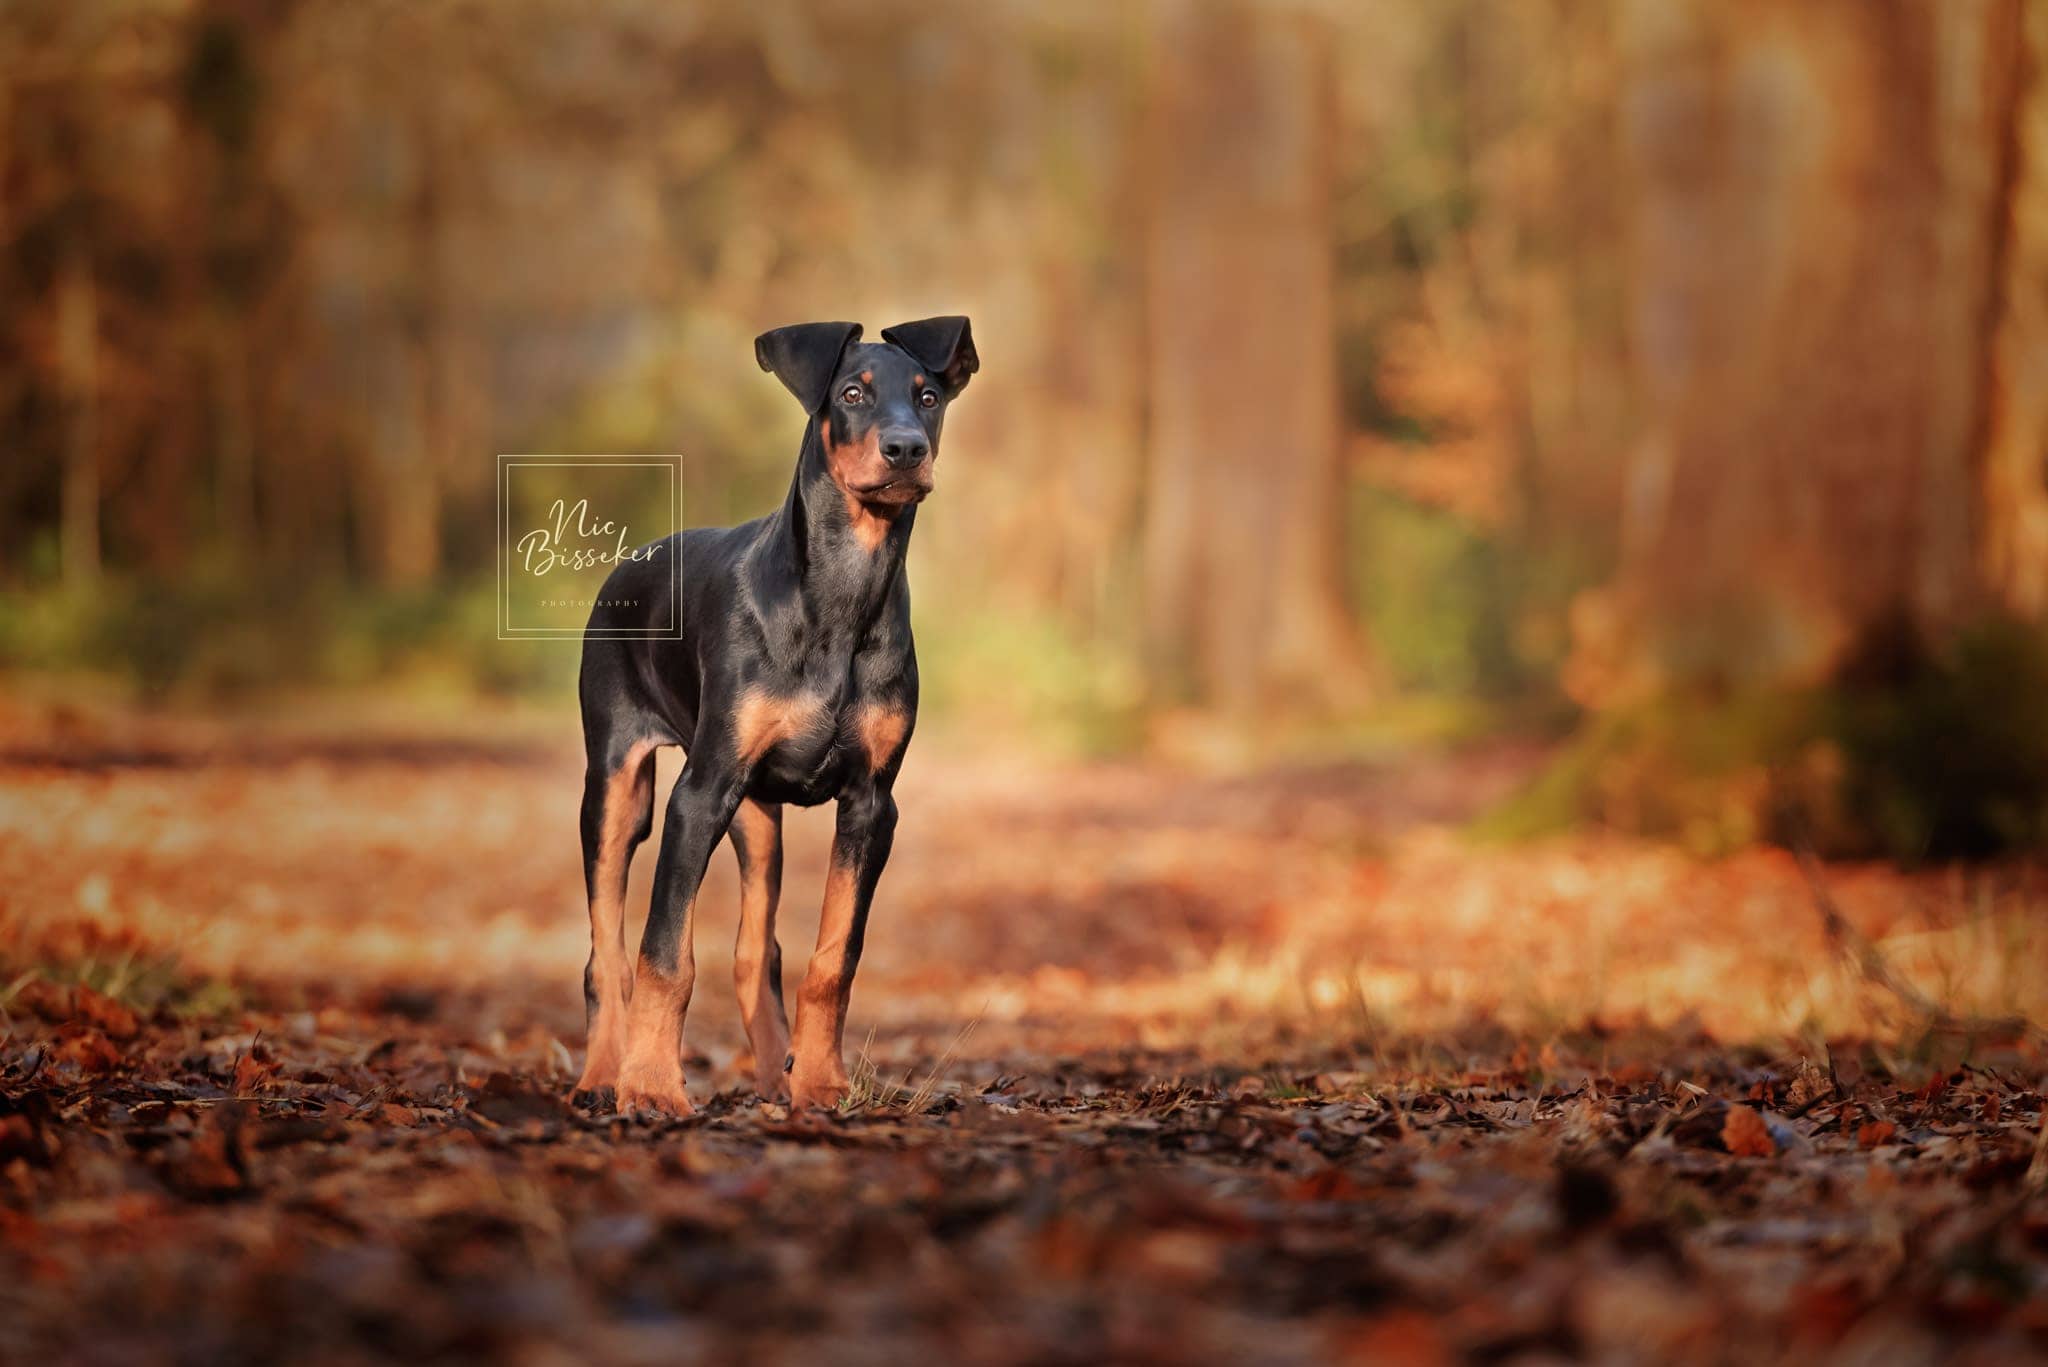 Nic Bisseker photographer puppy photoshoot kent